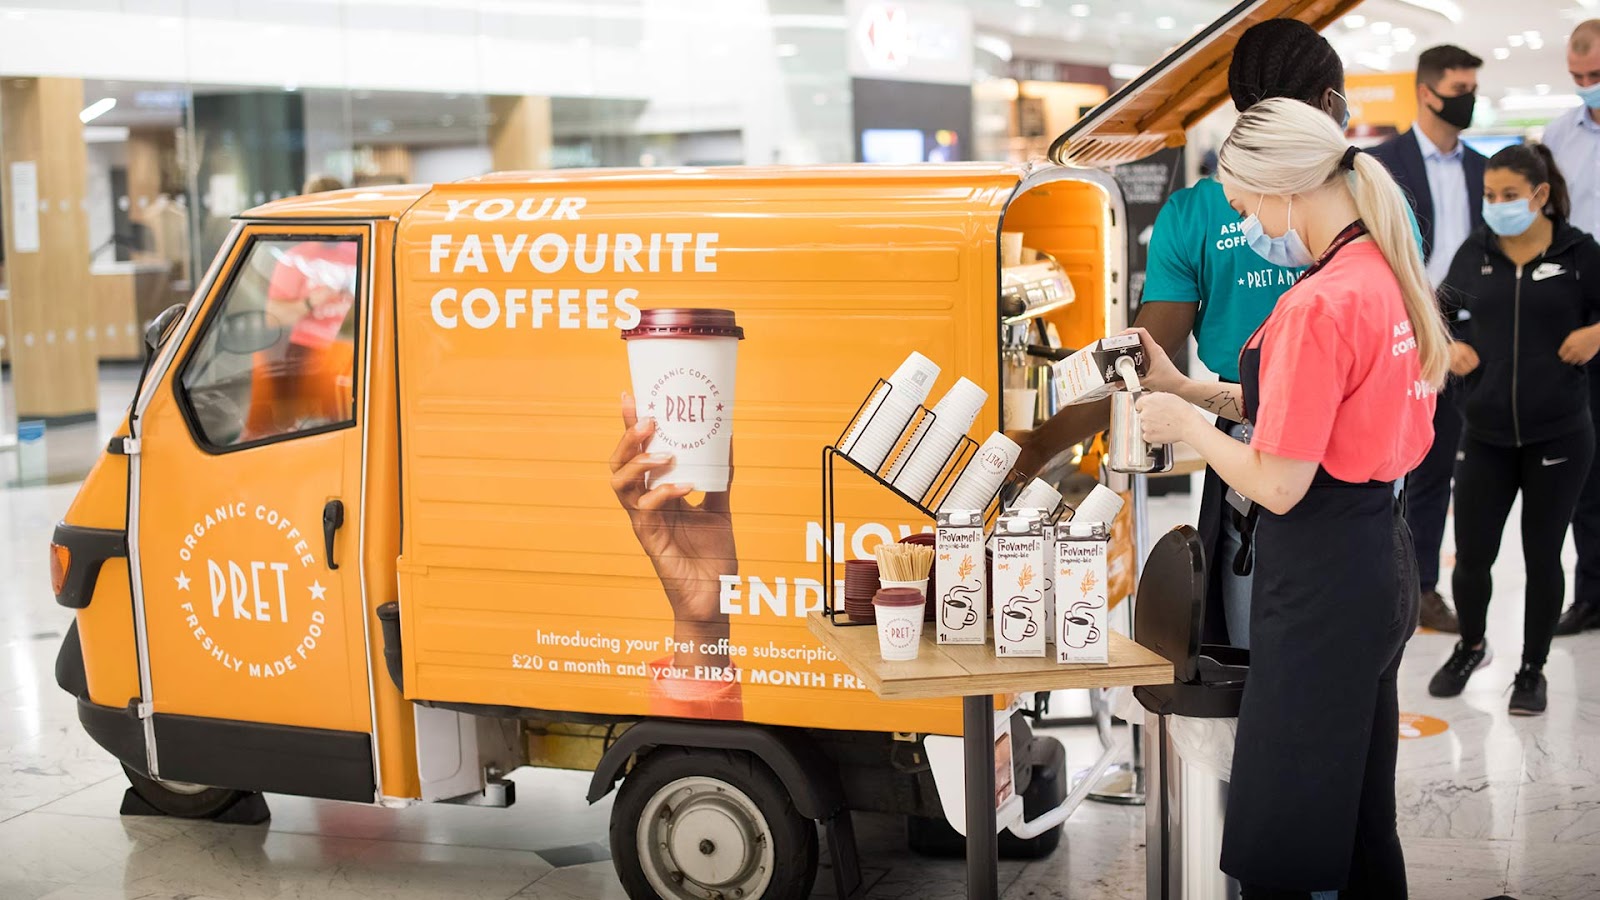 Pret's branded Piaggio van dispensing coffee for patrons 